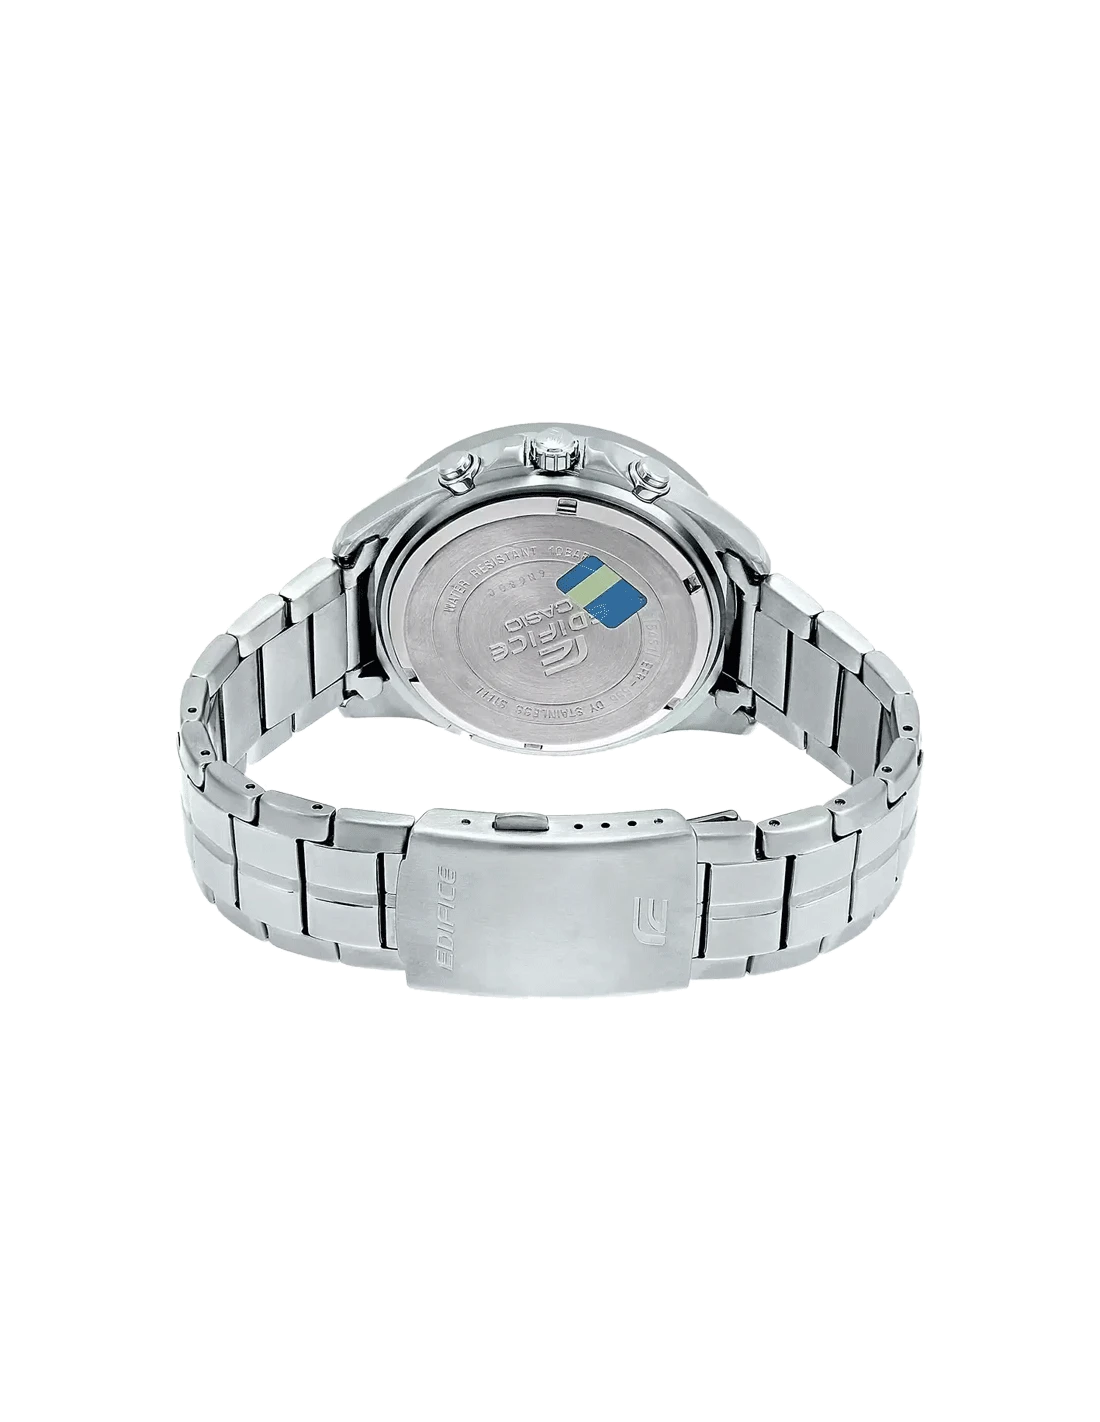 Casio Edifice Chronograph Black Dial Men'S Watch - Efr-556D-1Avudf(Ex360)